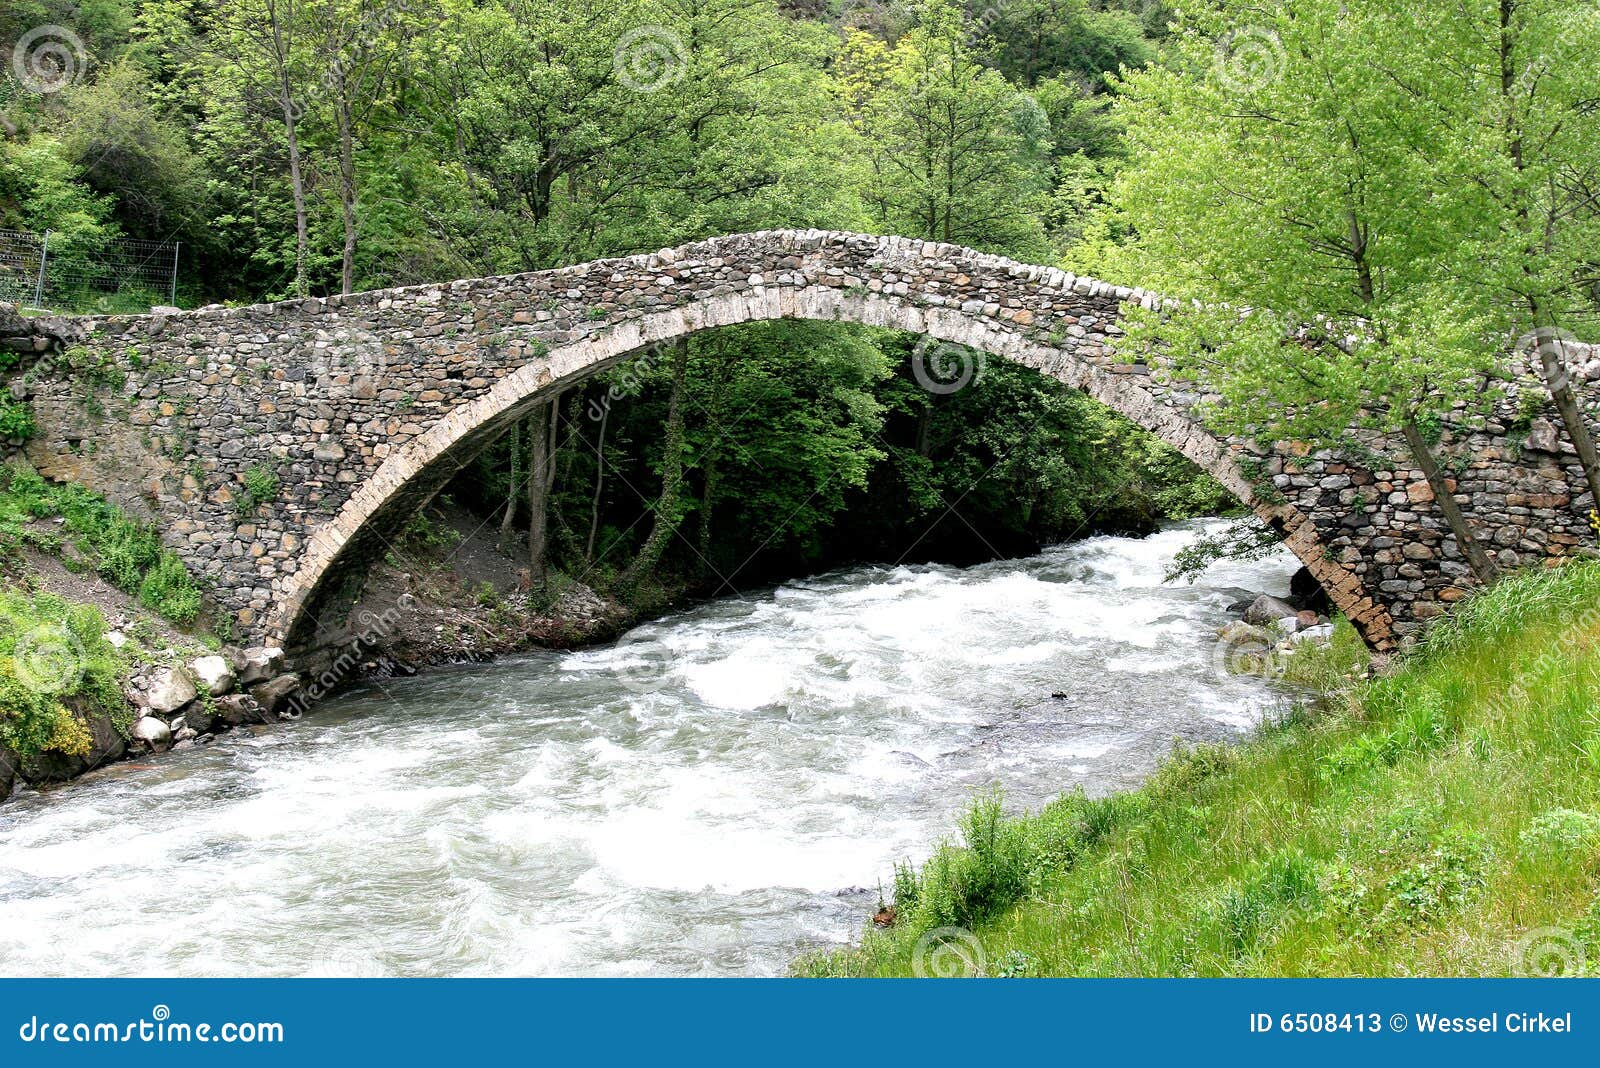 a romanesque bridge in andorra